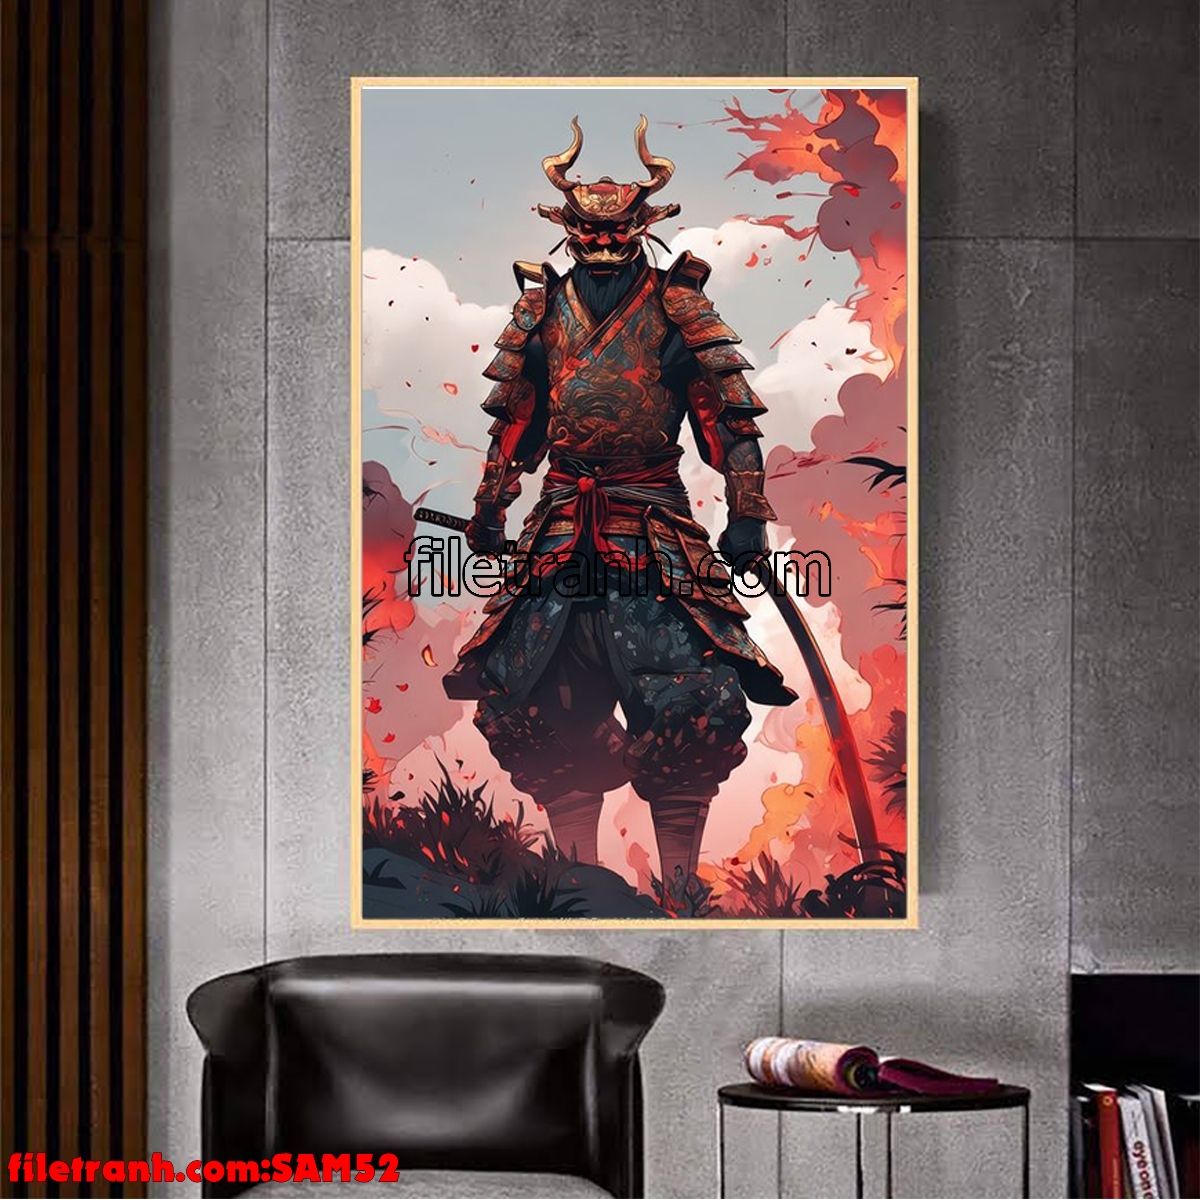 https://filetranh.com/samurai/file-tranh-samurai-vo-si-nhat-ban-sam52.html